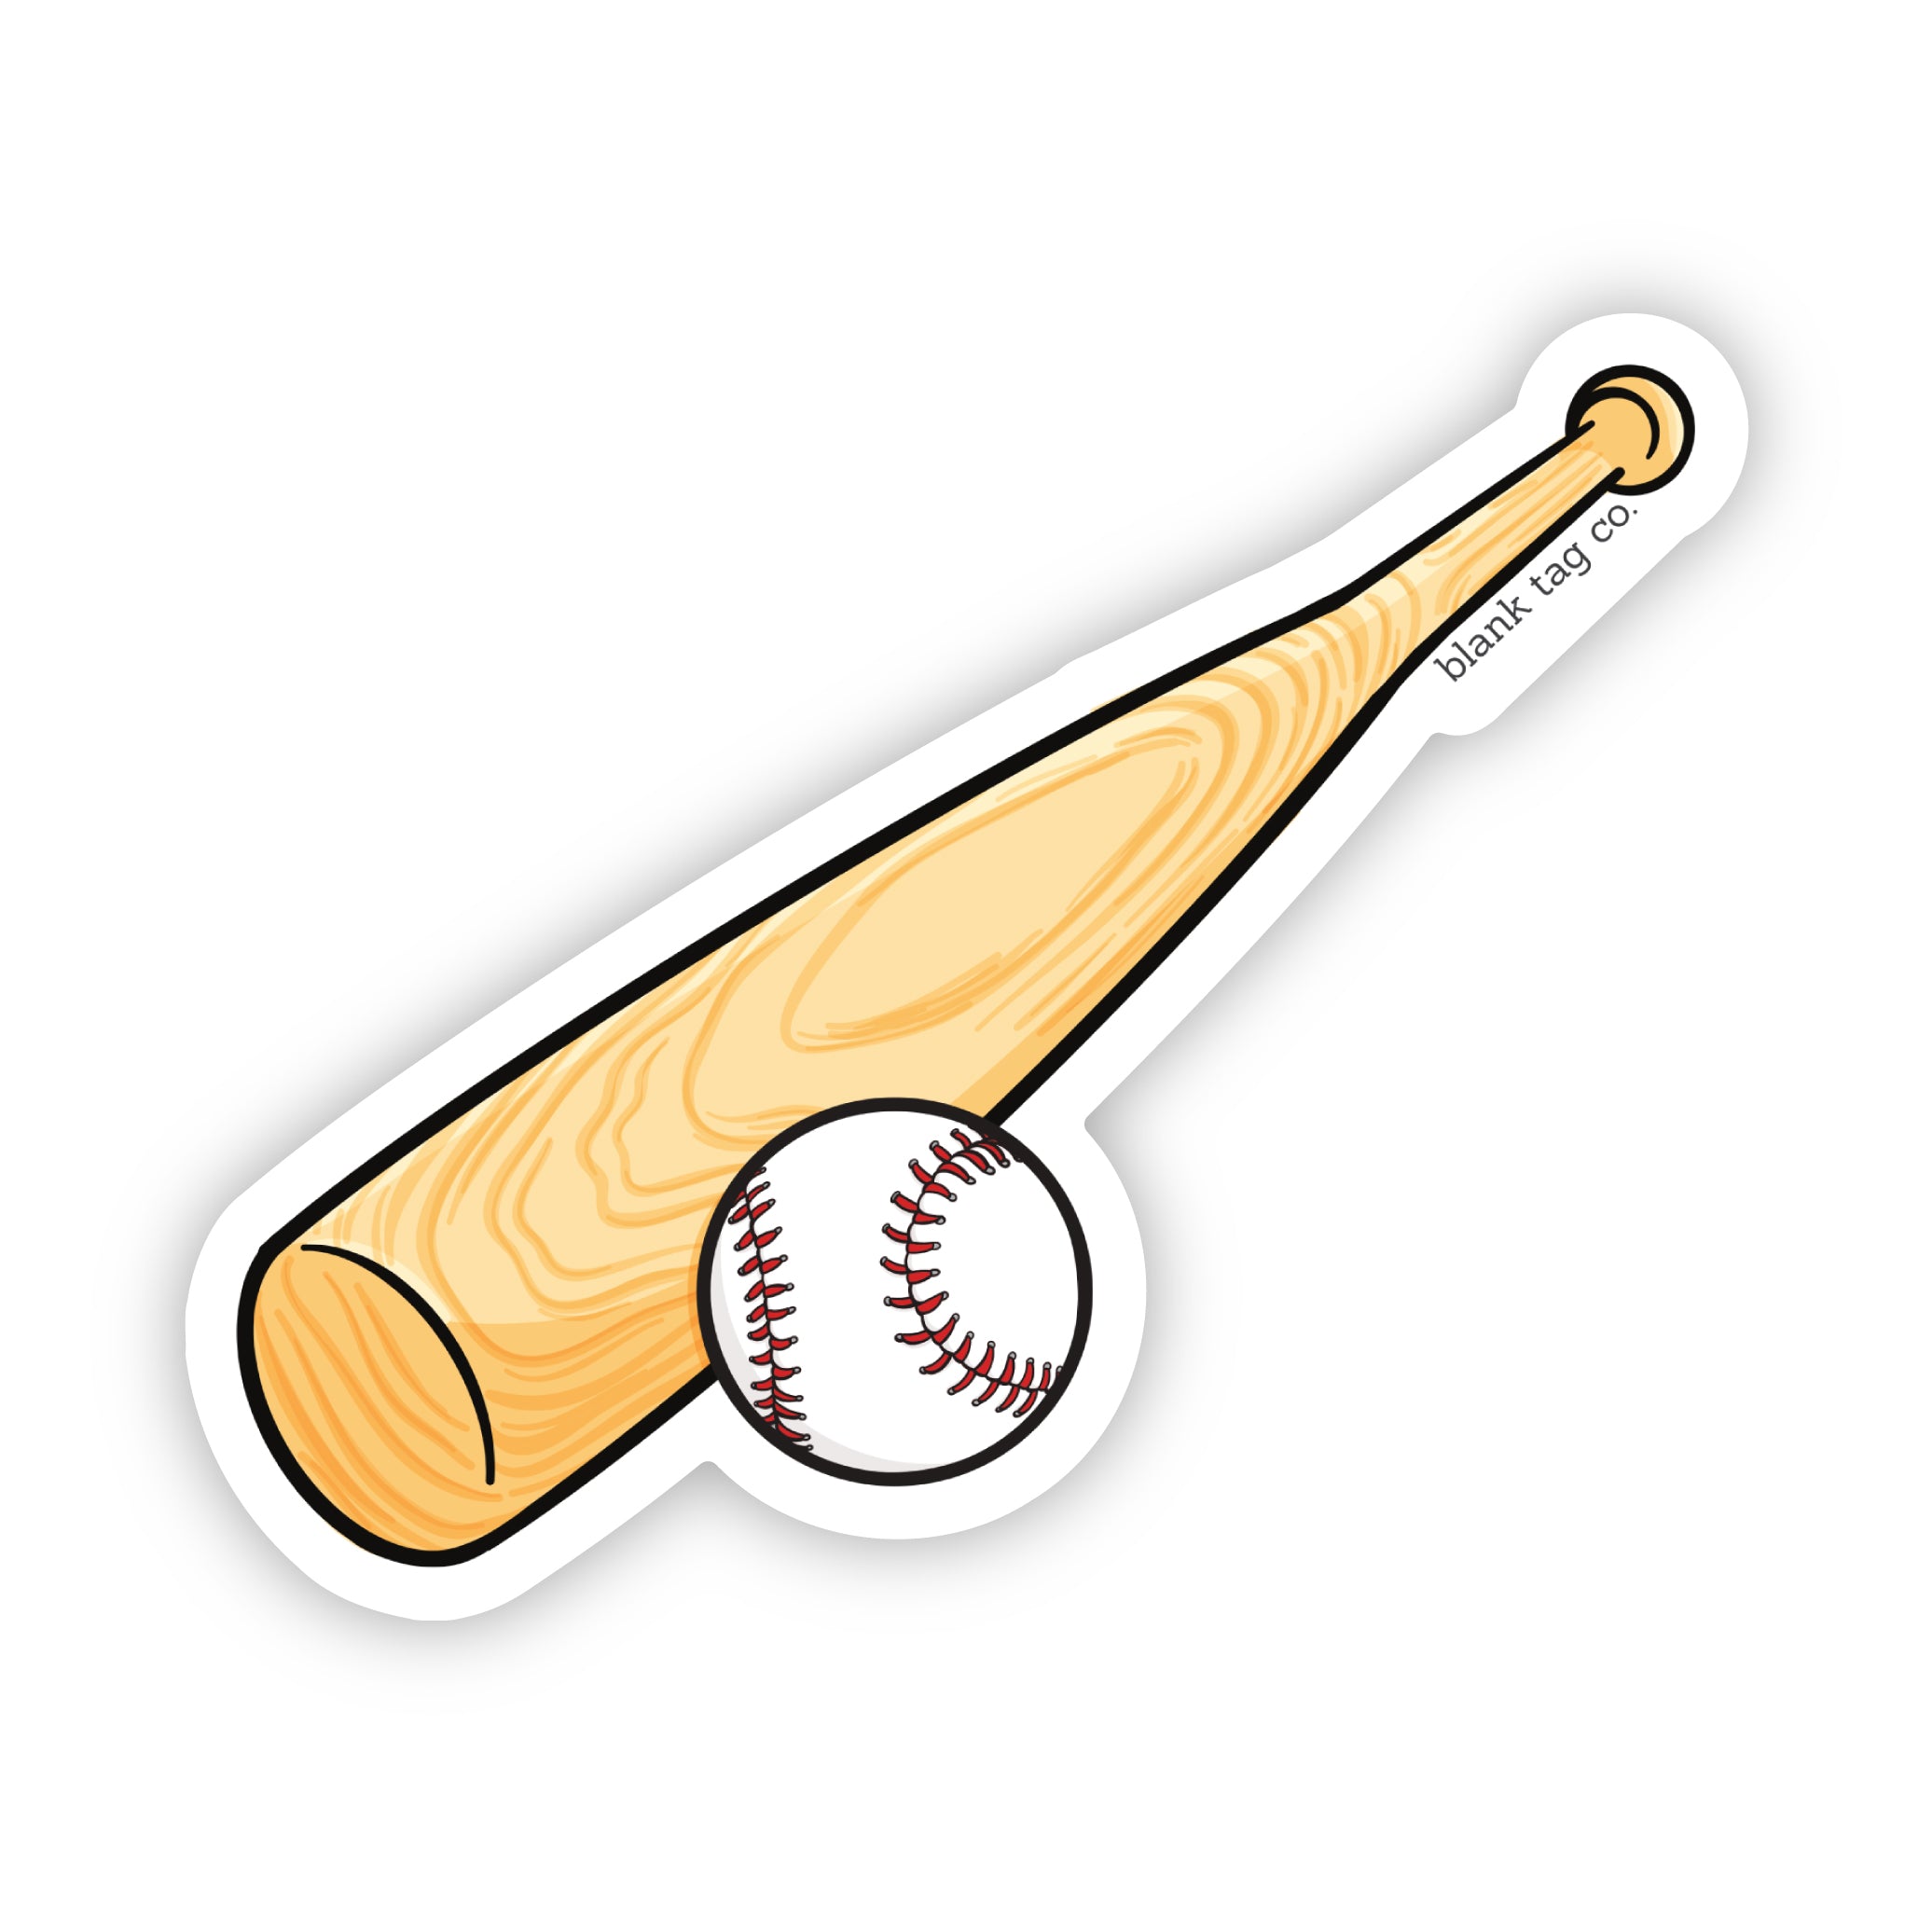 The Baseball Bat and Ball Sticker